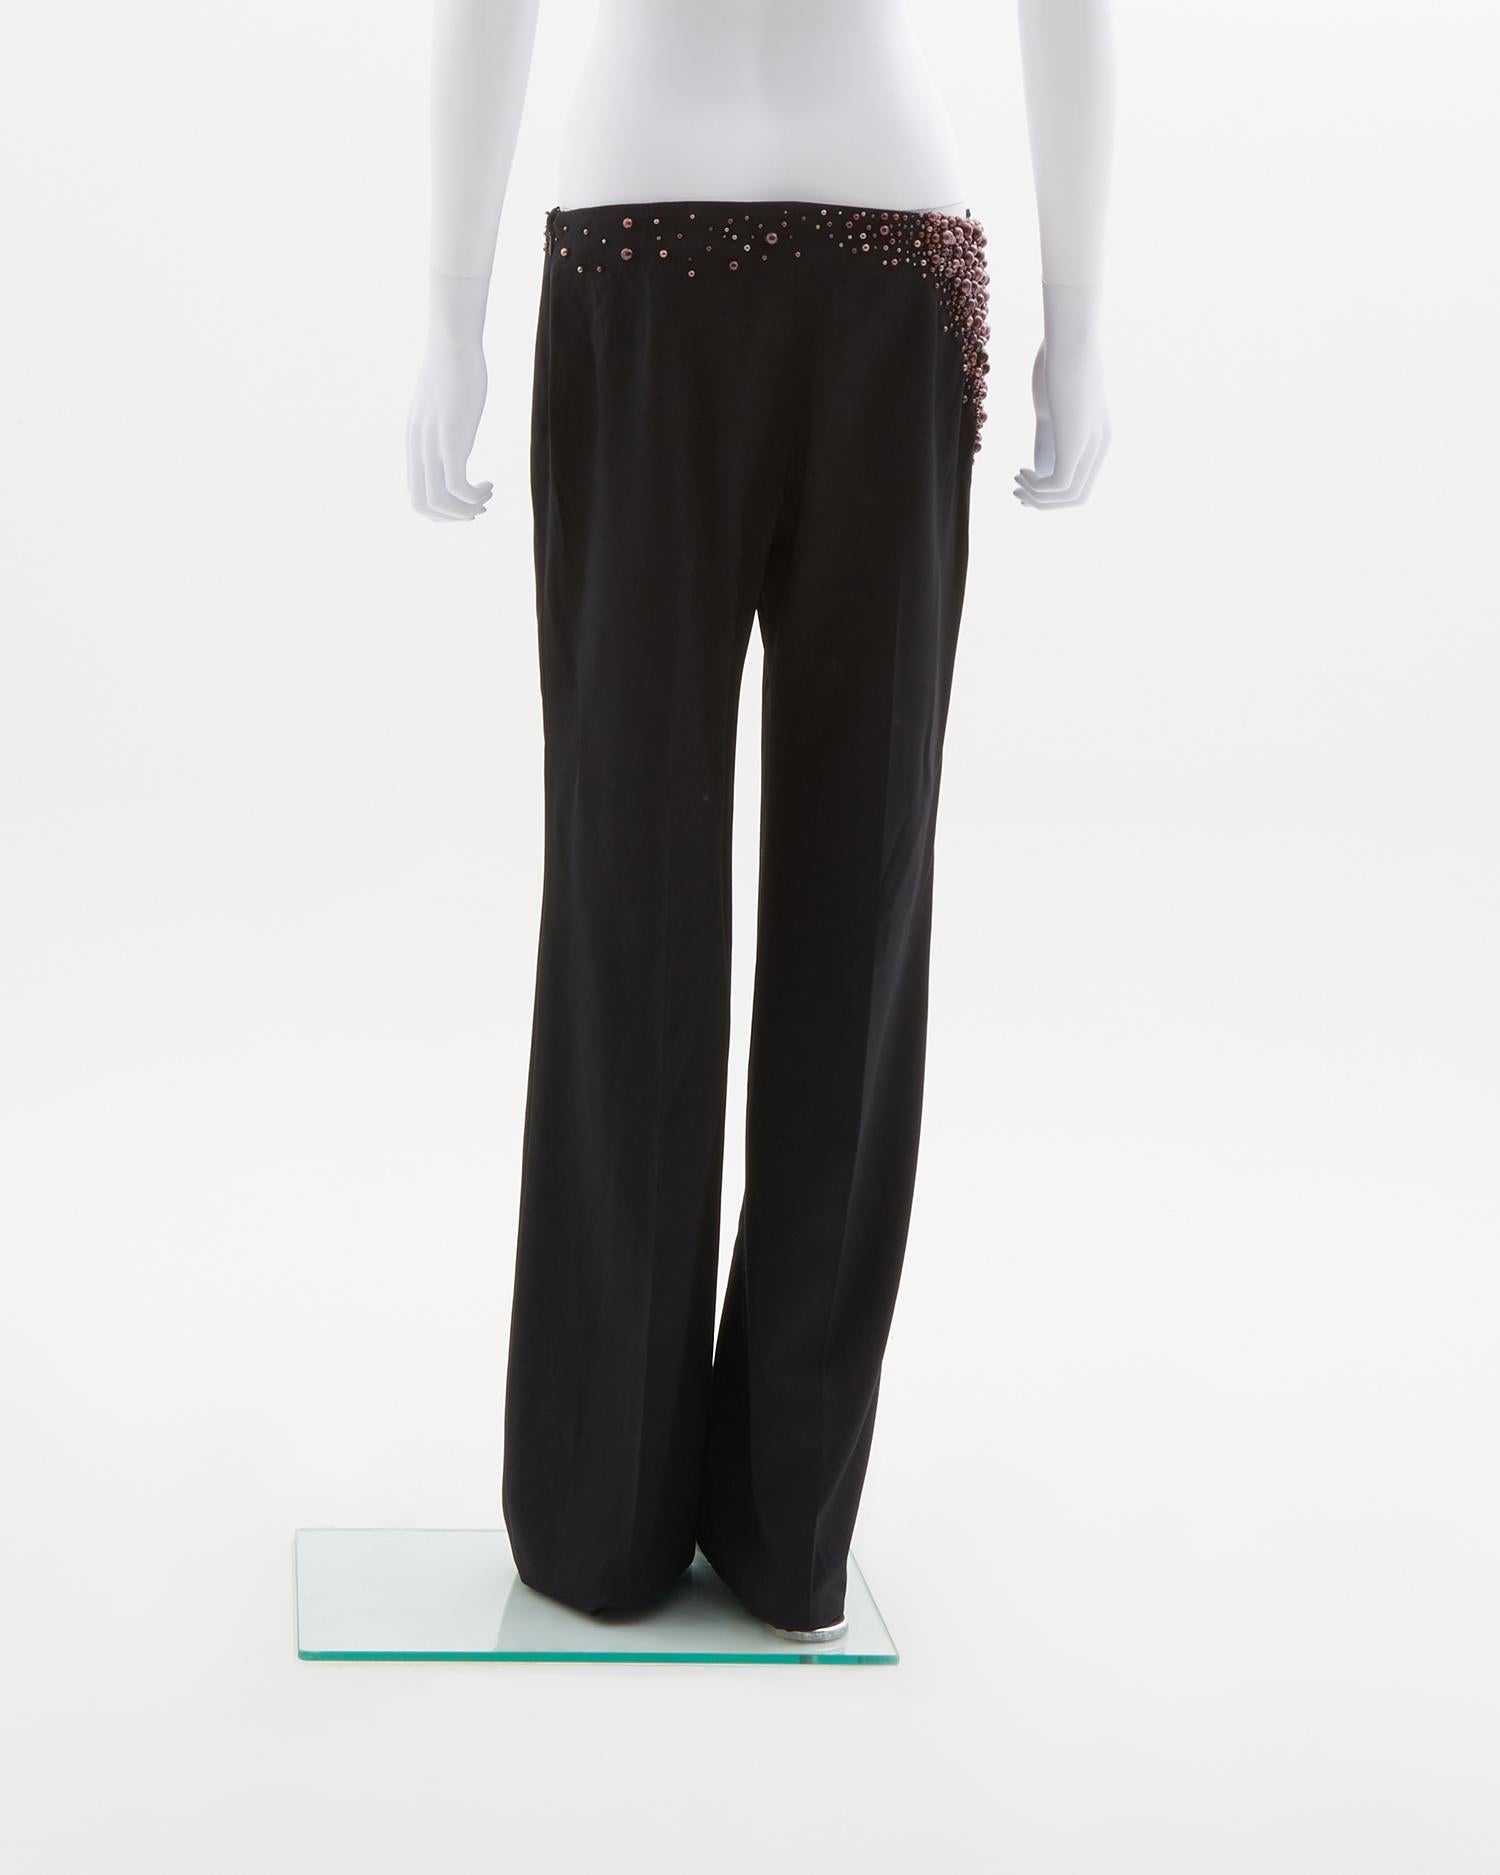 Women's Chloè  black silk pants with purple pearl applique, fw 2001  For Sale